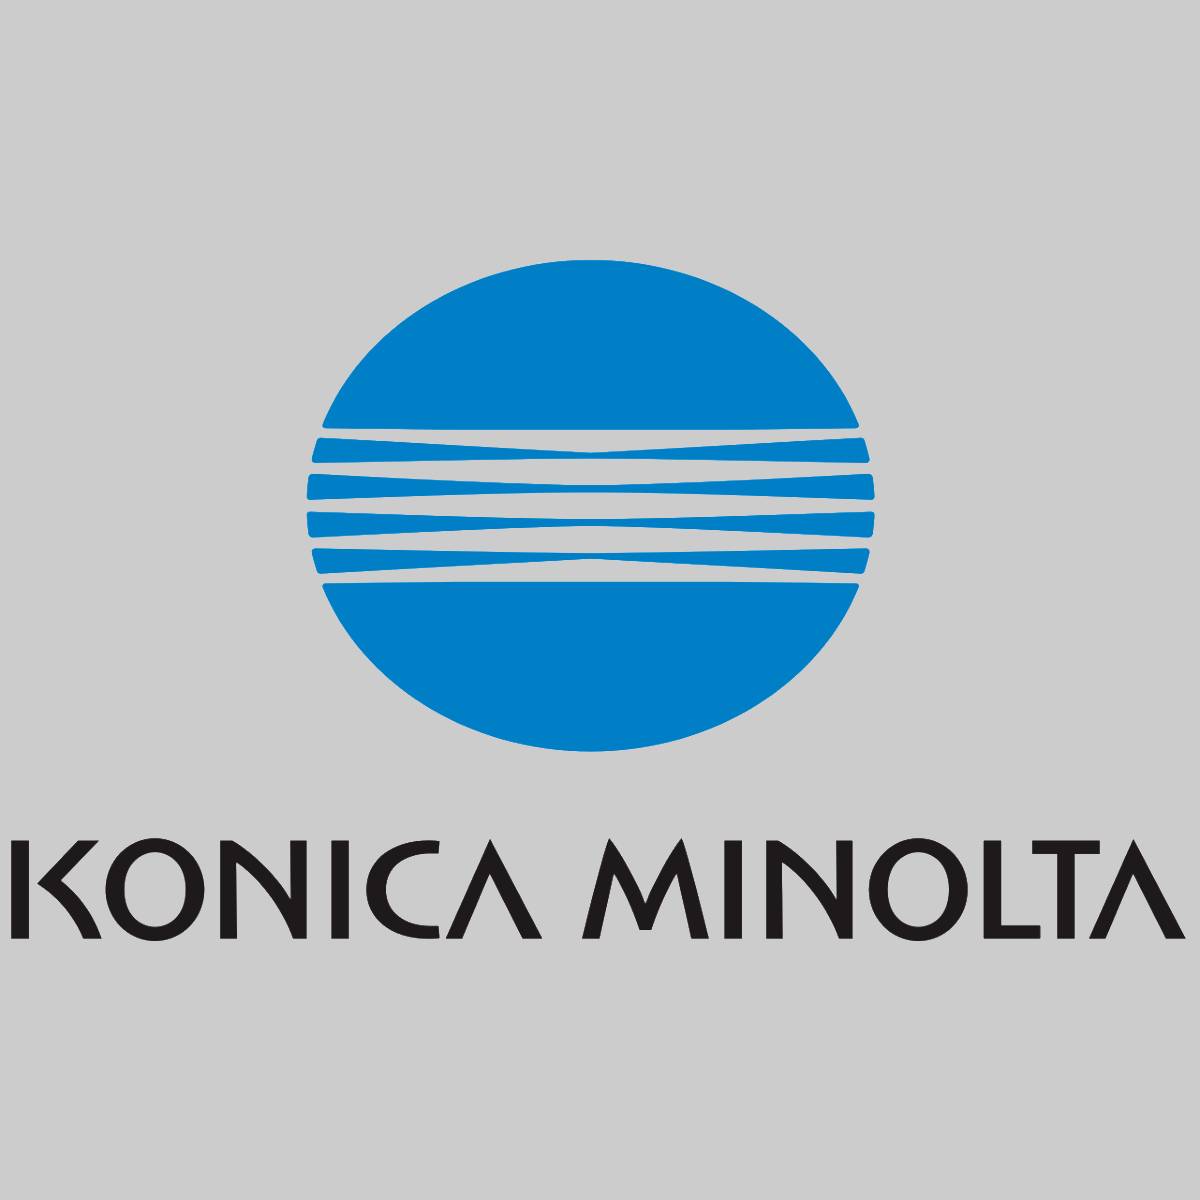 "Originele Konica Minolta filterwisseleenheid A1DUR70300 voor Bizhub C6000 C700